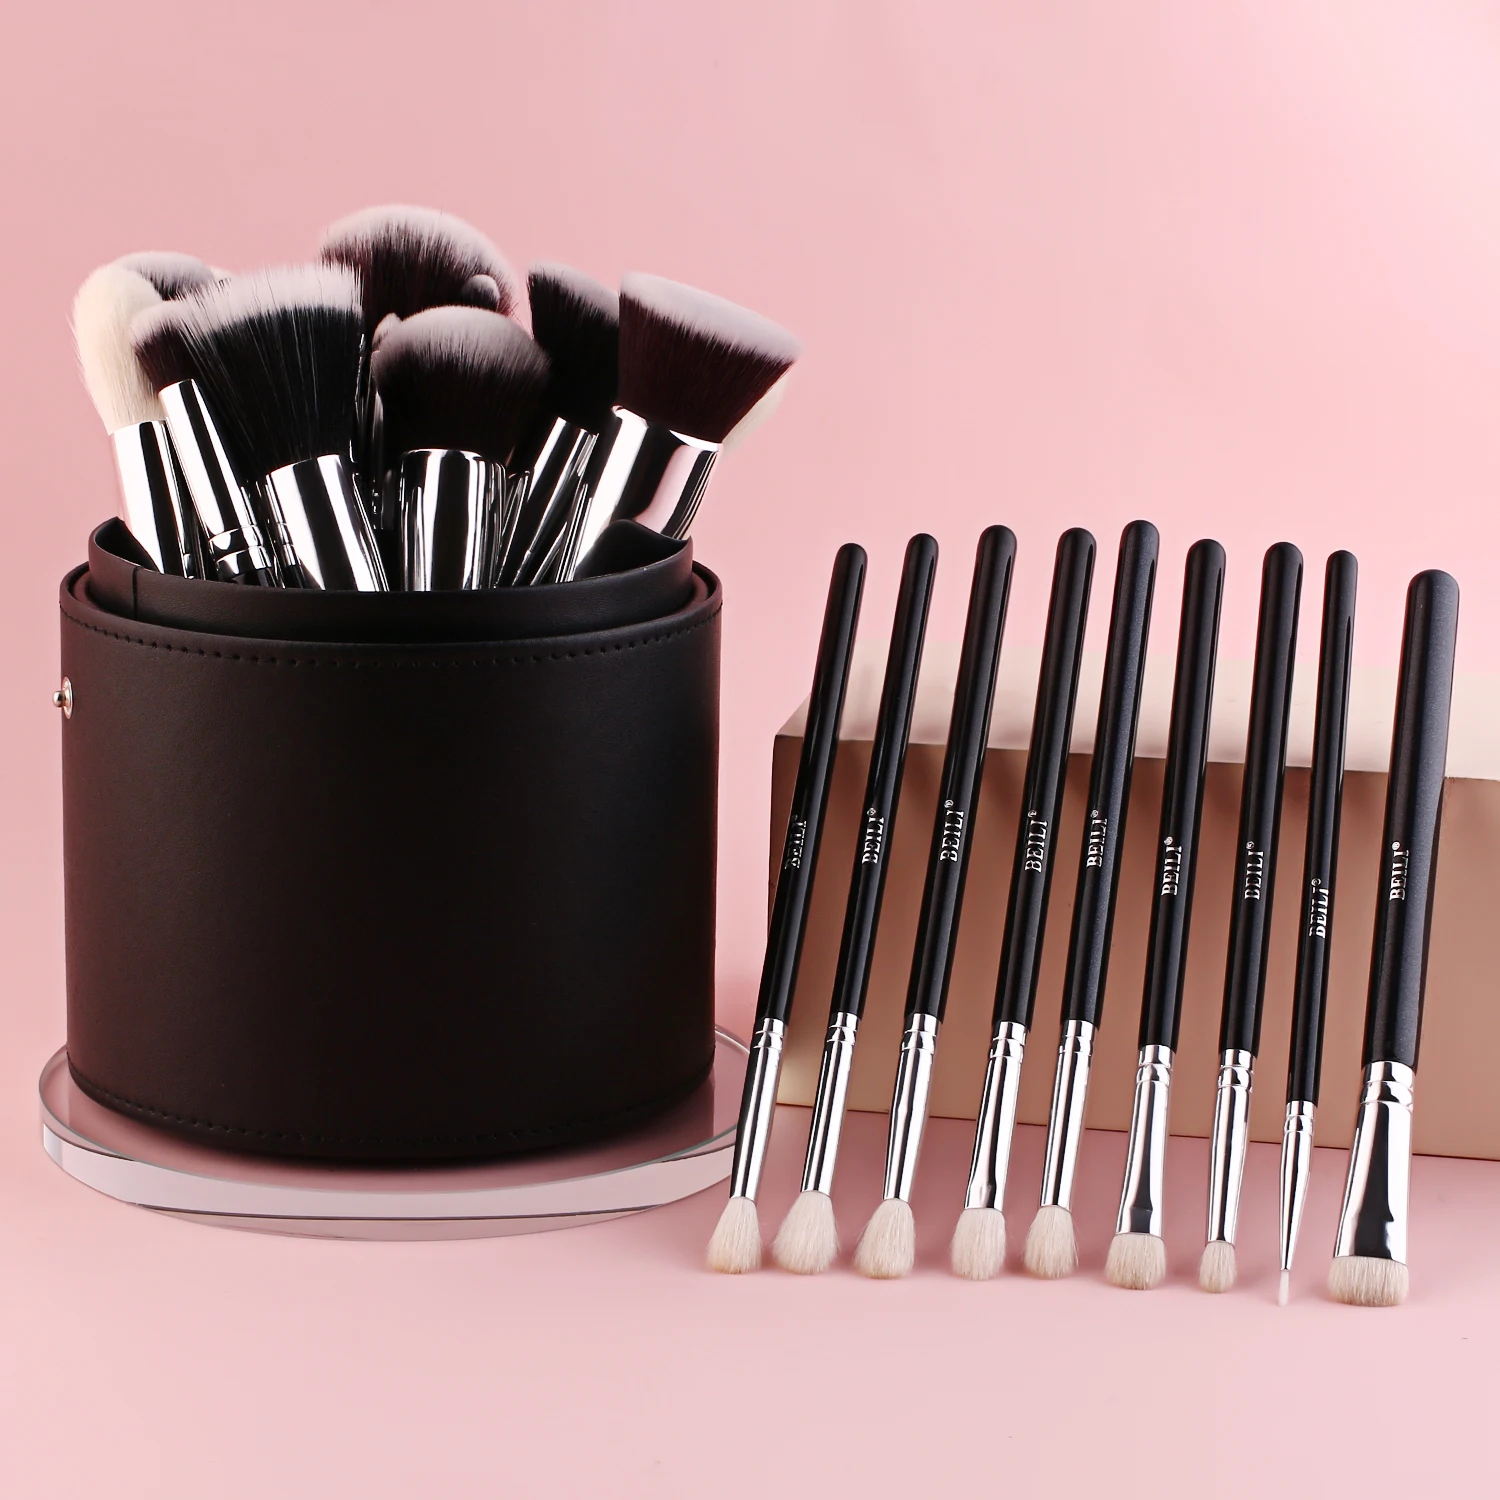 BEILI High Quality Professional Makeup Brushes for Foundation Powder Contour Eyeshadow Blending Set with Case органайзер